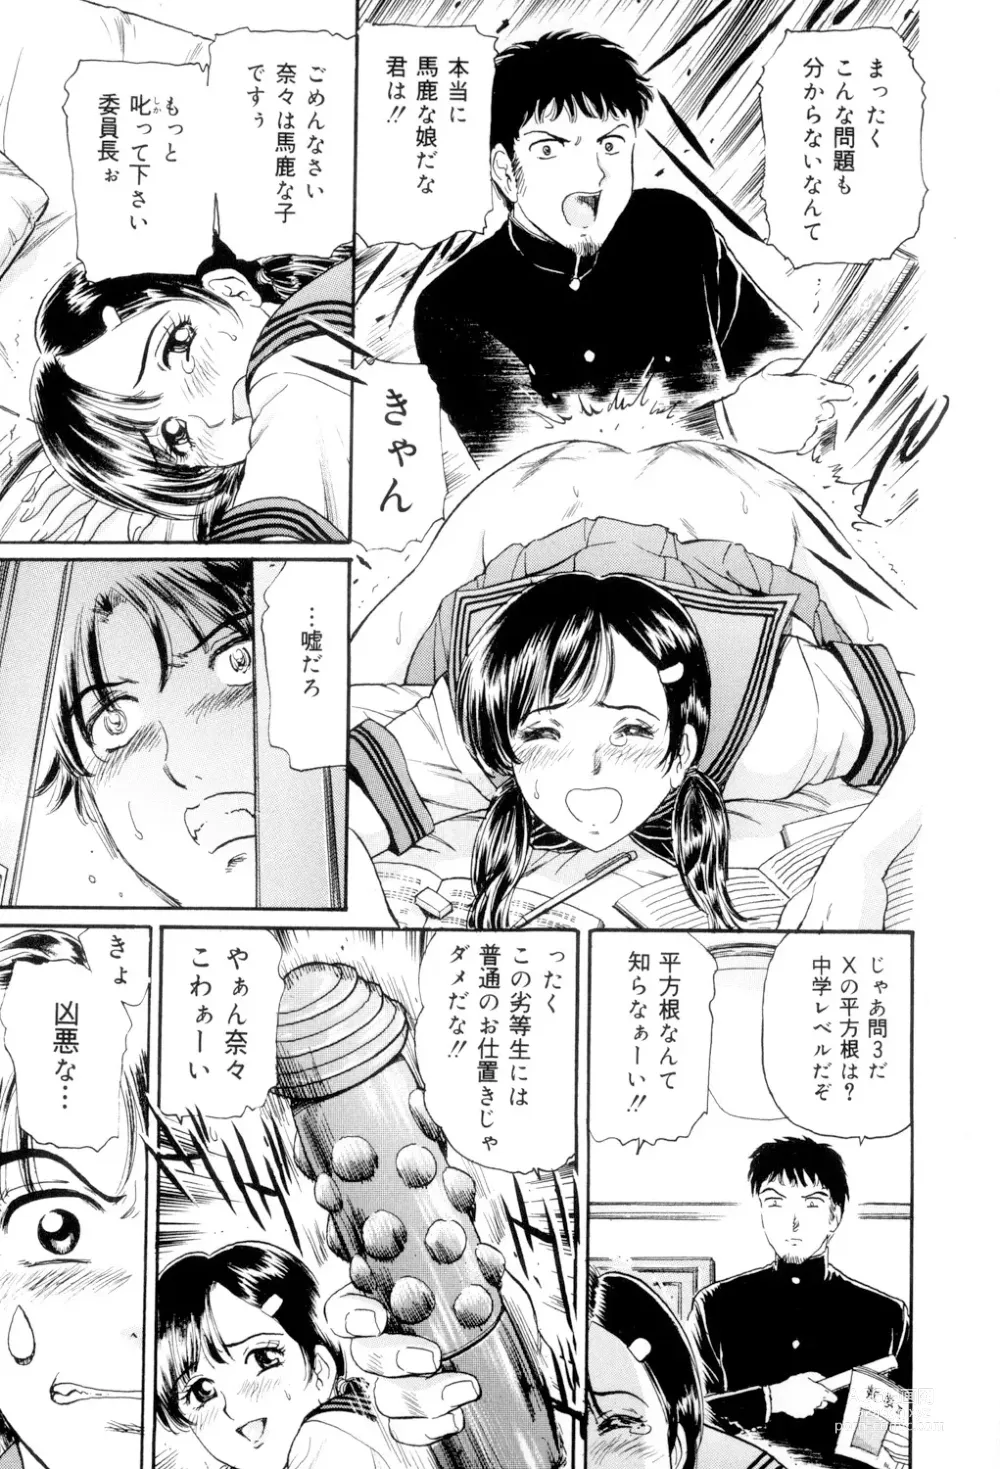 Page 6 of manga Mecha Mote Furin